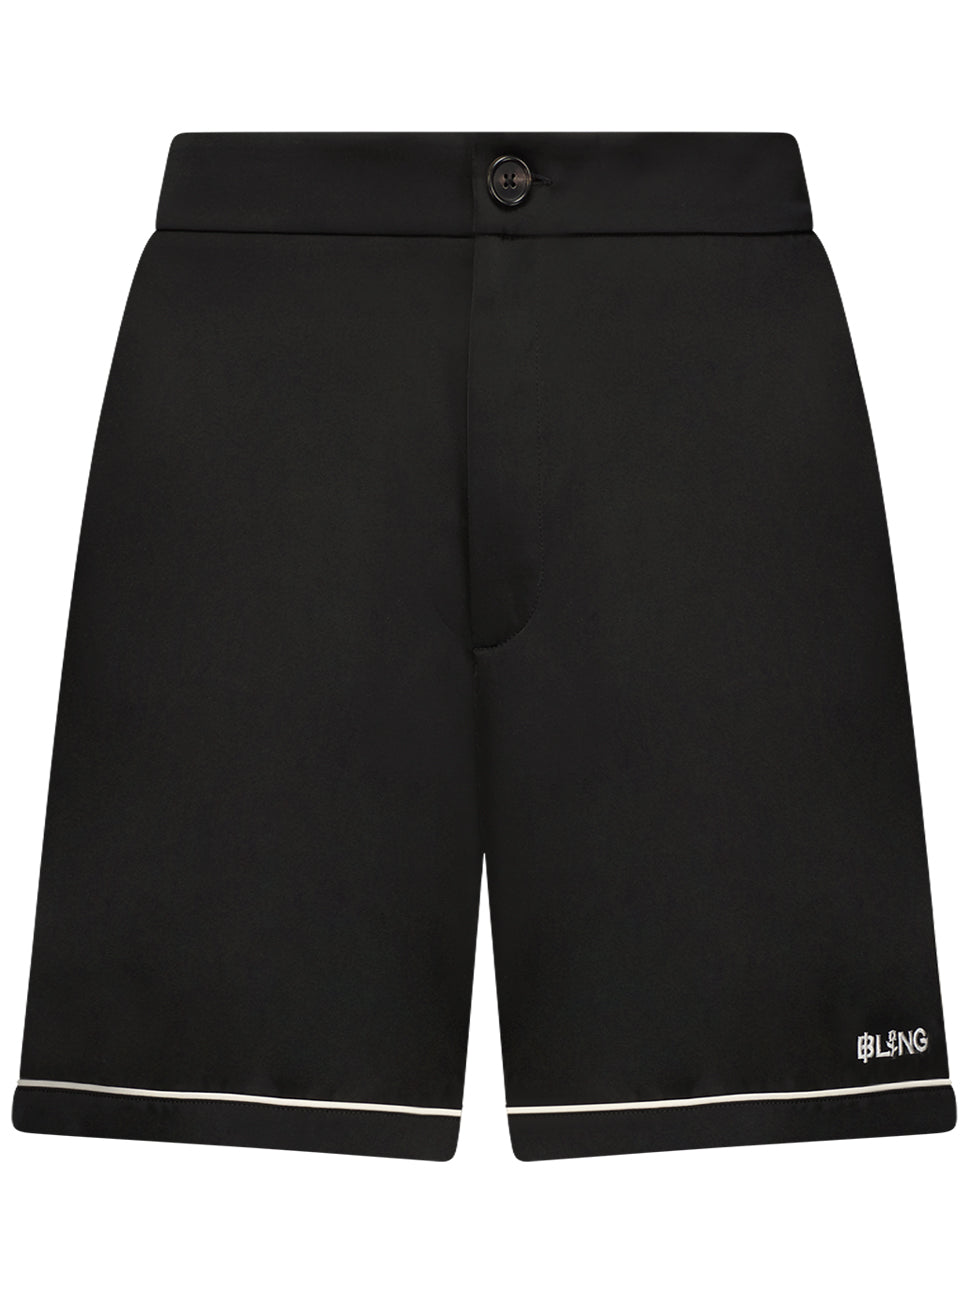 Bling x The Blooming Man Pajama Shorts Black BLB BS01